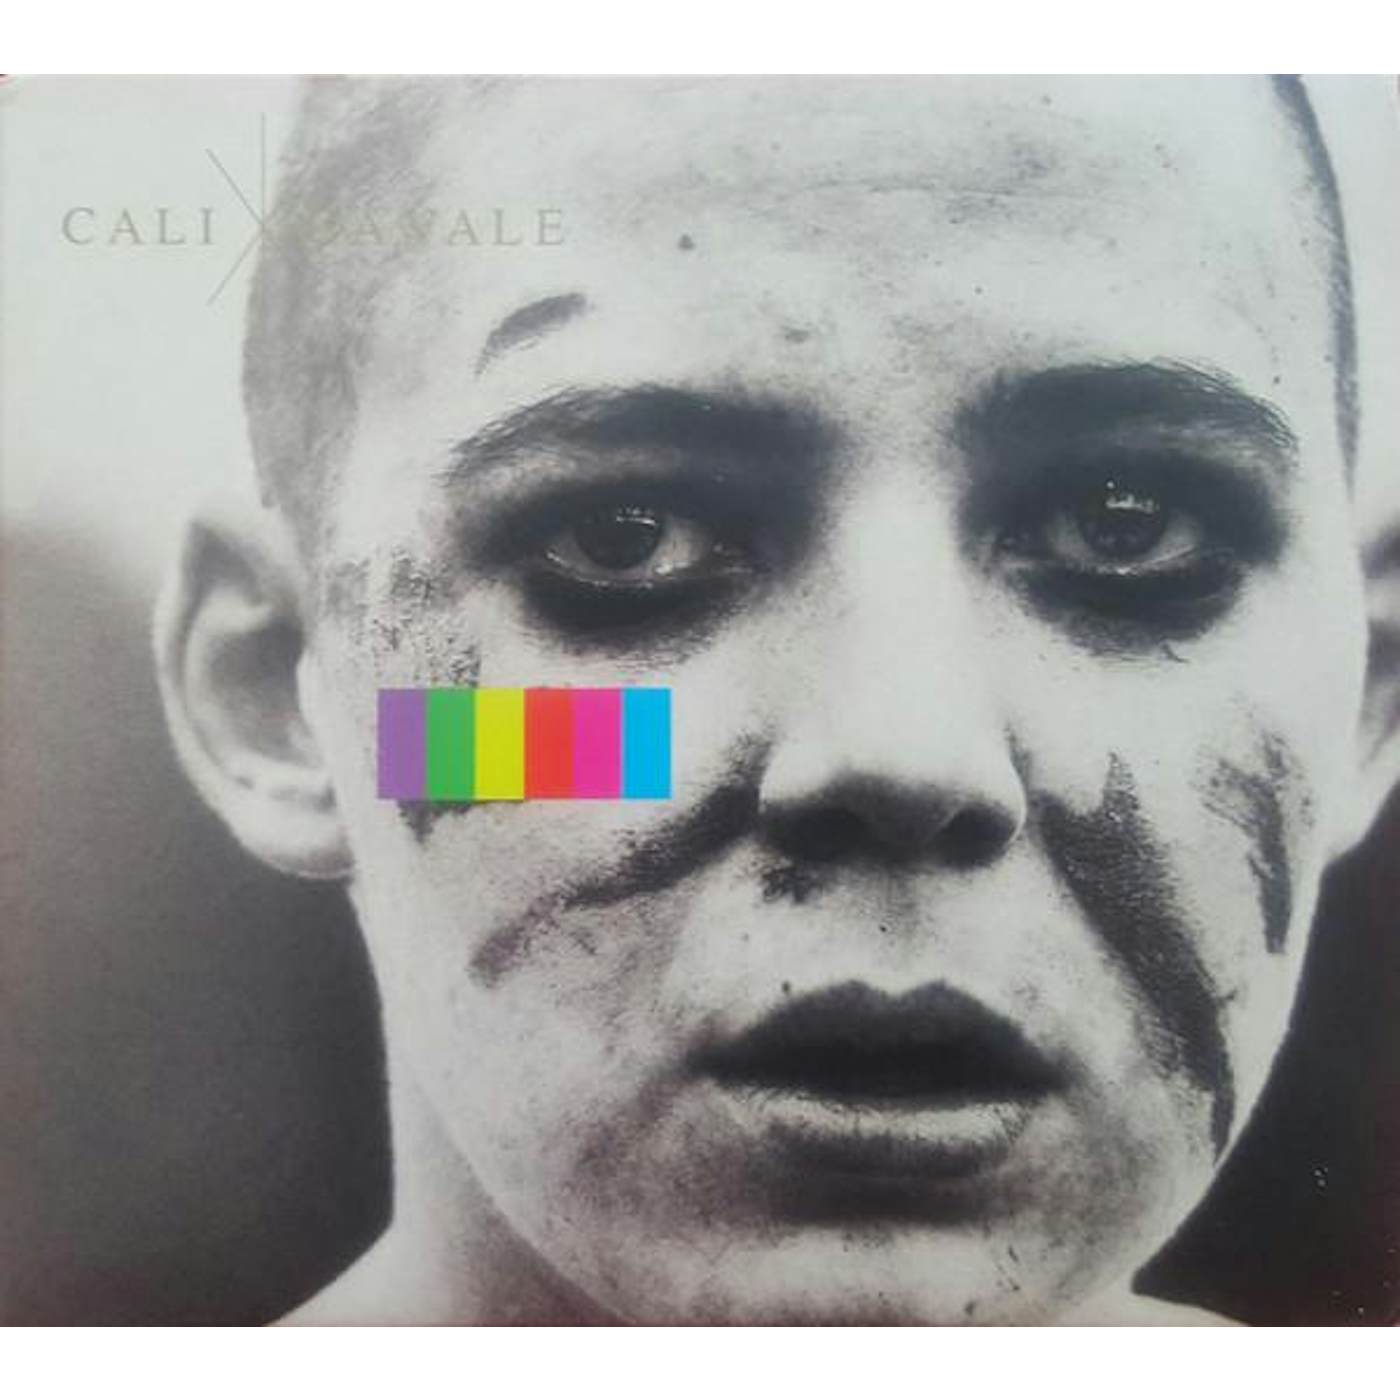 Cali Cavale Vinyl Record